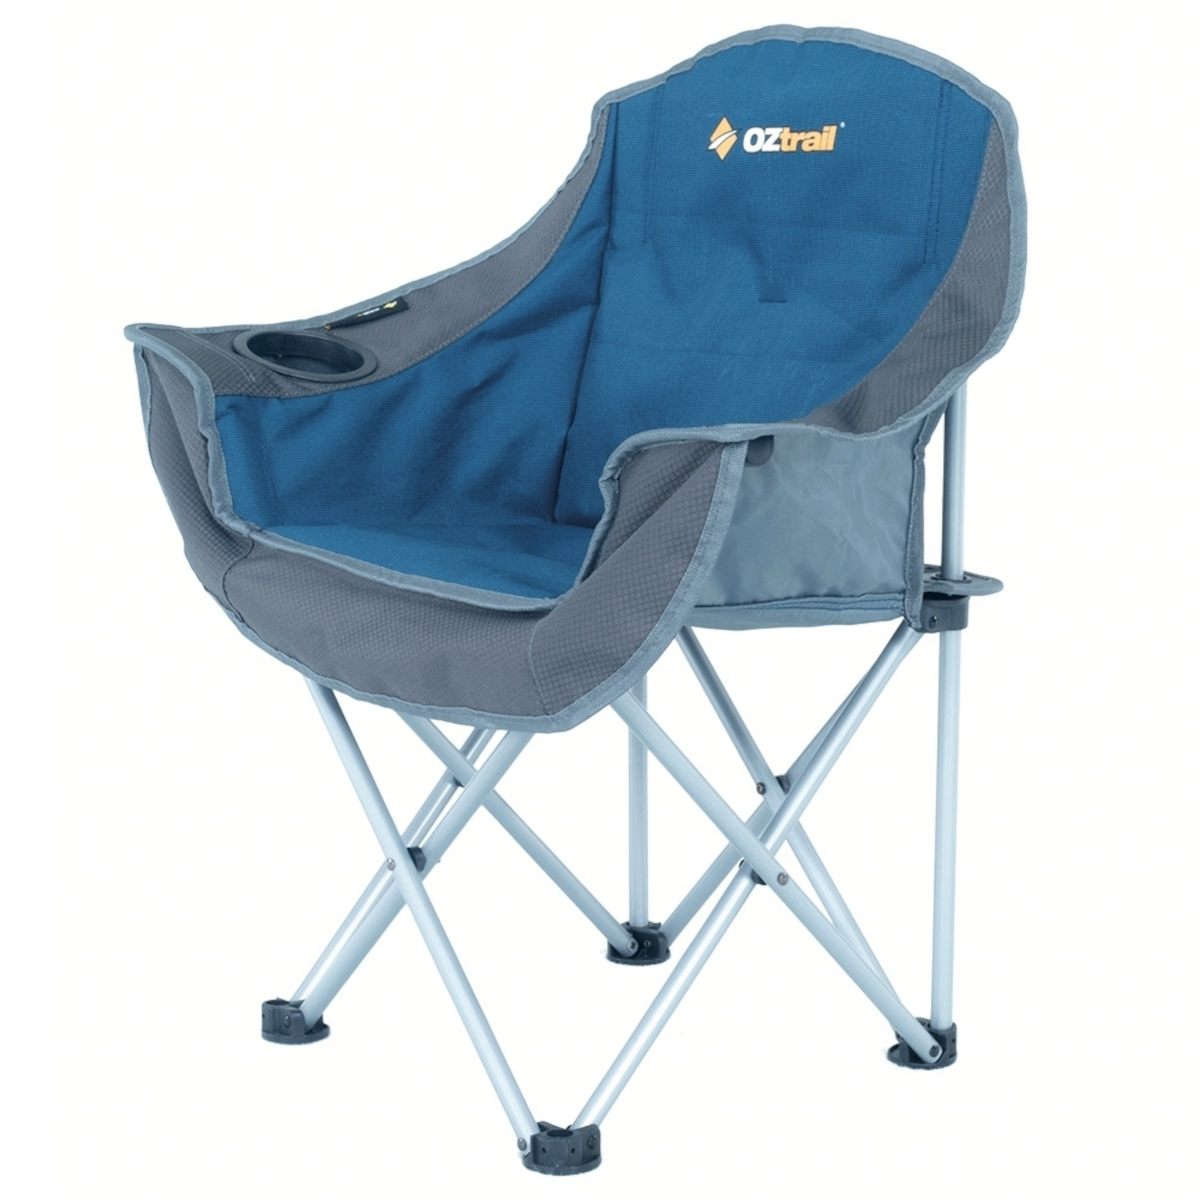 Oztrial Jnr Moon Chair Blue-foldable camp chair